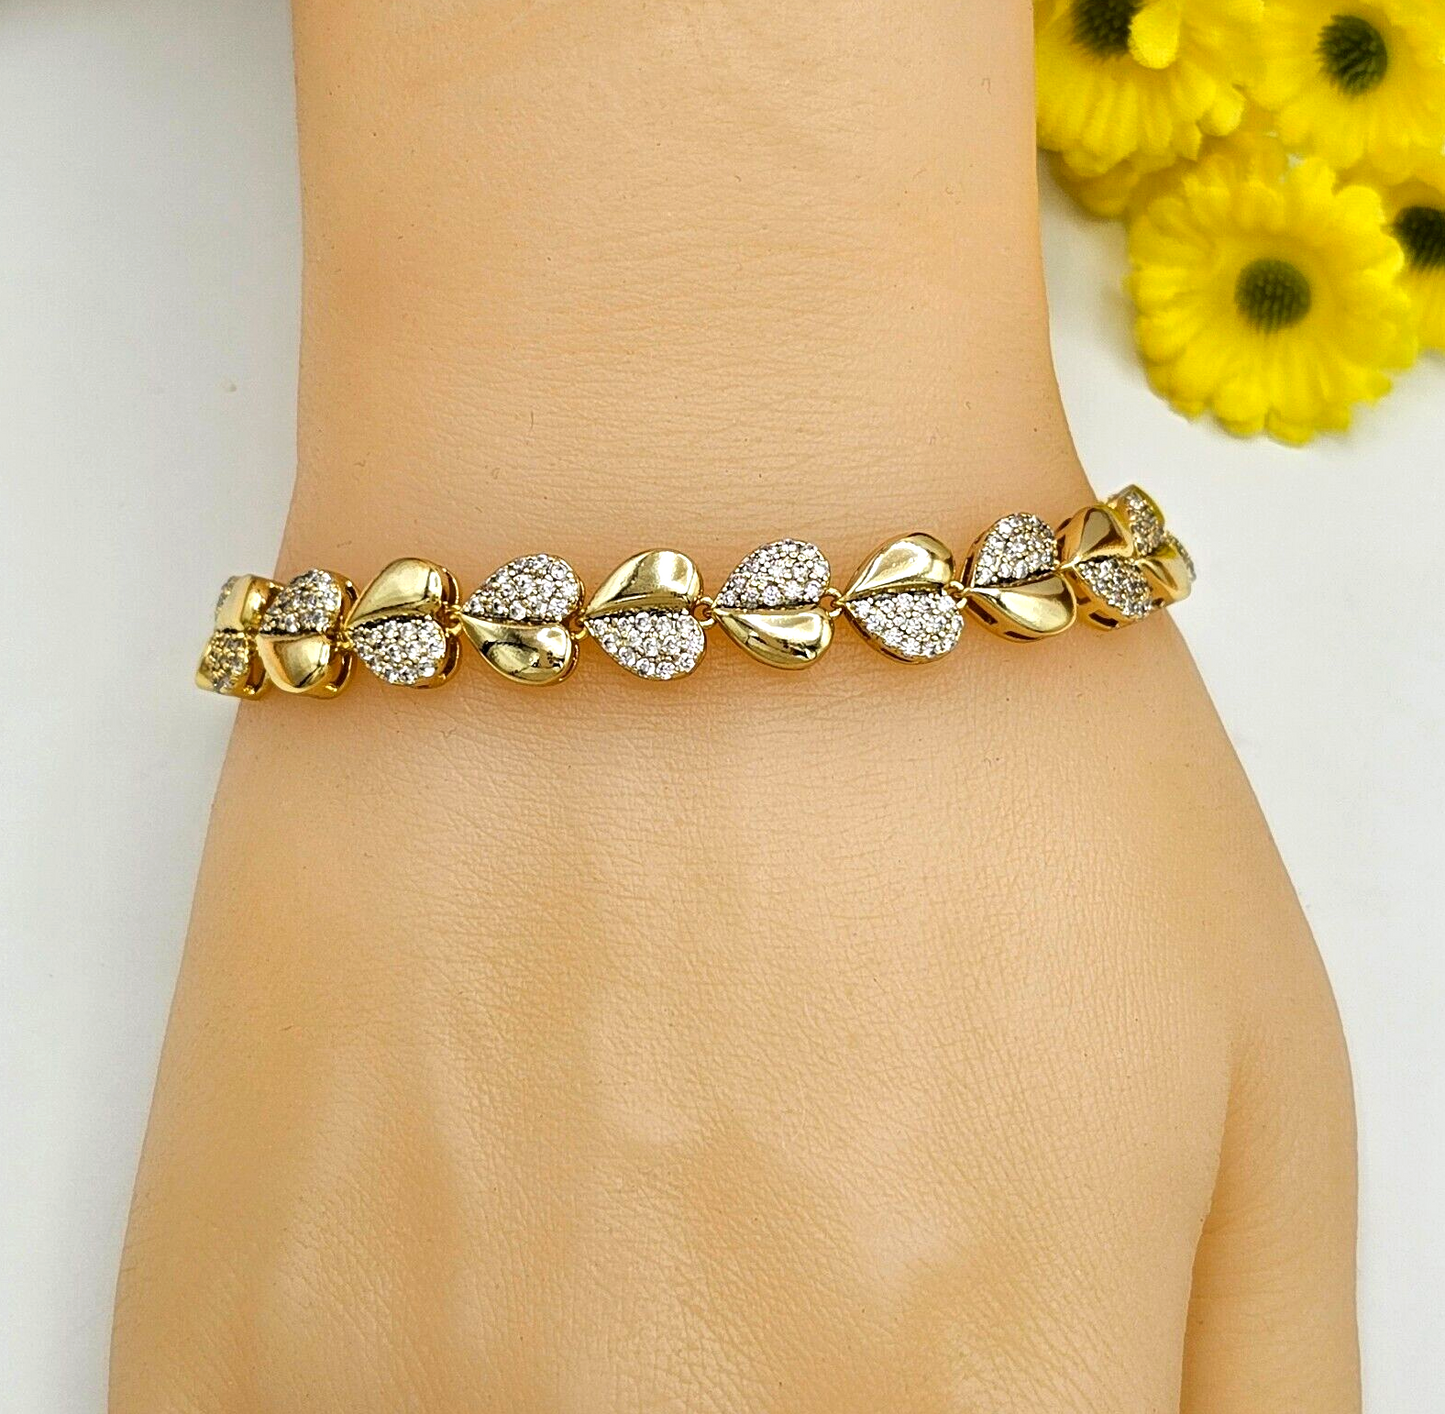 Bracelets - 14K Gold Plated. Hearts Clear Crystals bracelet